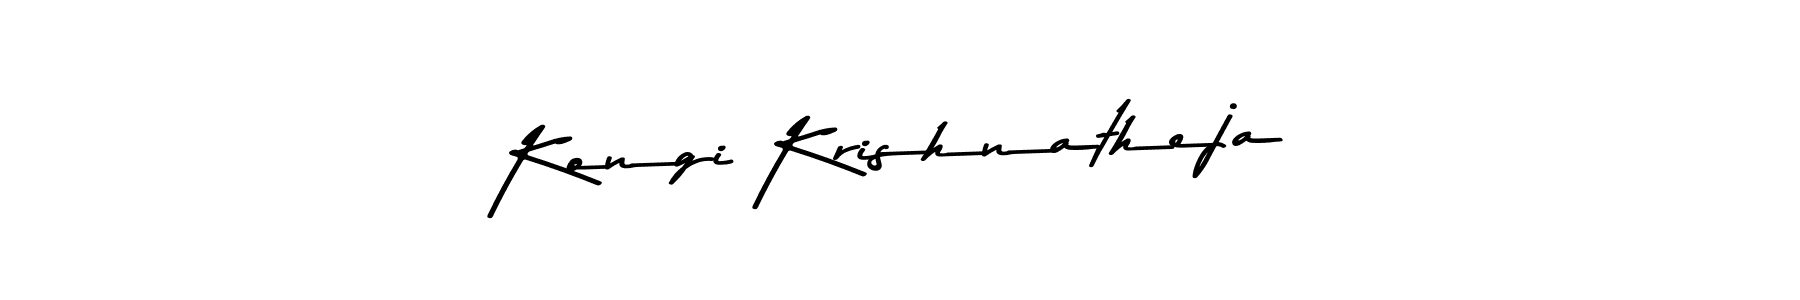 How to Draw Kongi Krishnatheja signature style? Asem Kandis PERSONAL USE is a latest design signature styles for name Kongi Krishnatheja. Kongi Krishnatheja signature style 9 images and pictures png